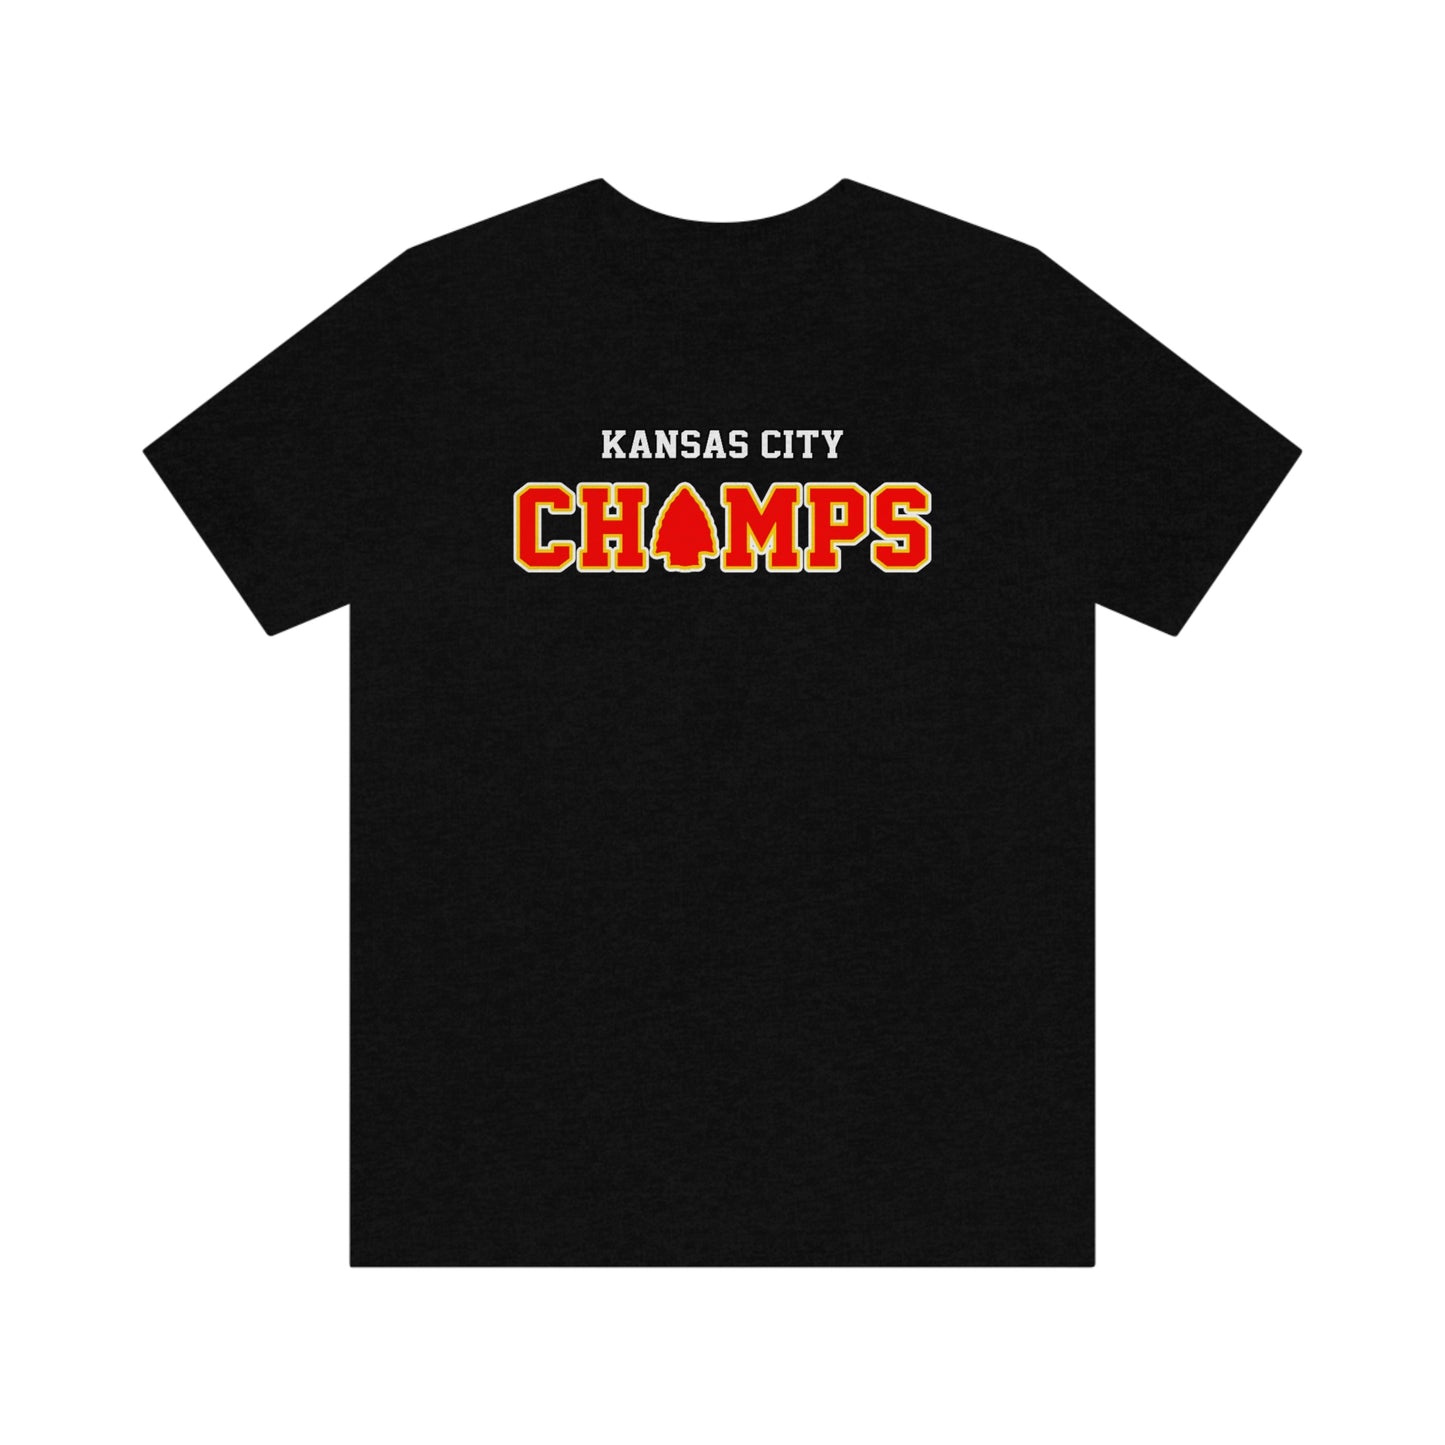 Kansas City CHAMPS – Tee Shirt – Black